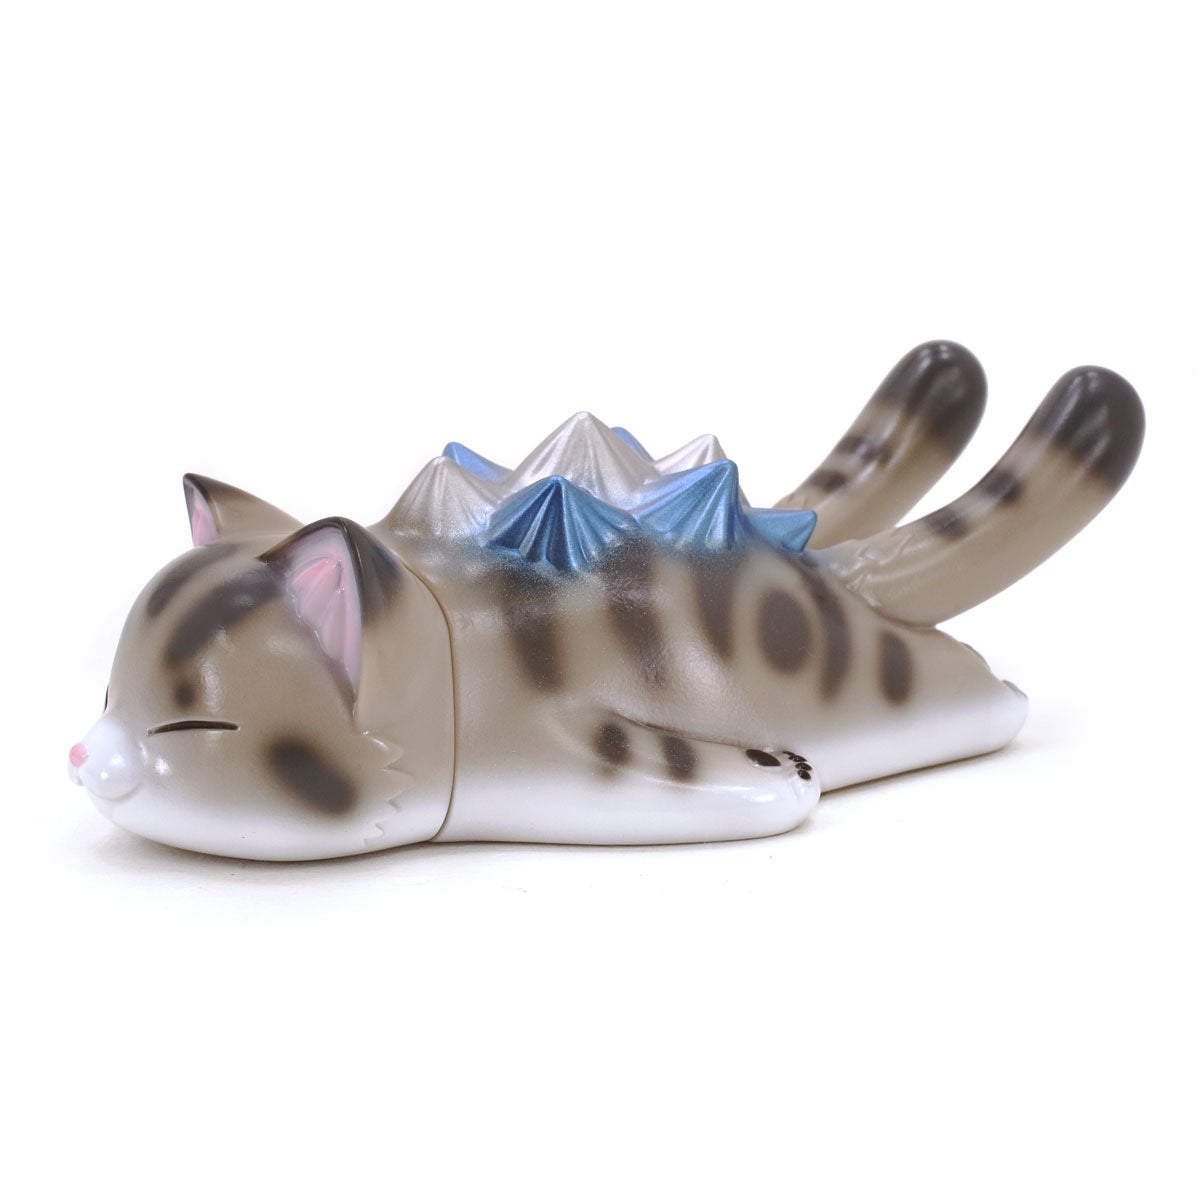 Sleeping Negora American Shorthair Sofubi Art Toy by Konatsuya